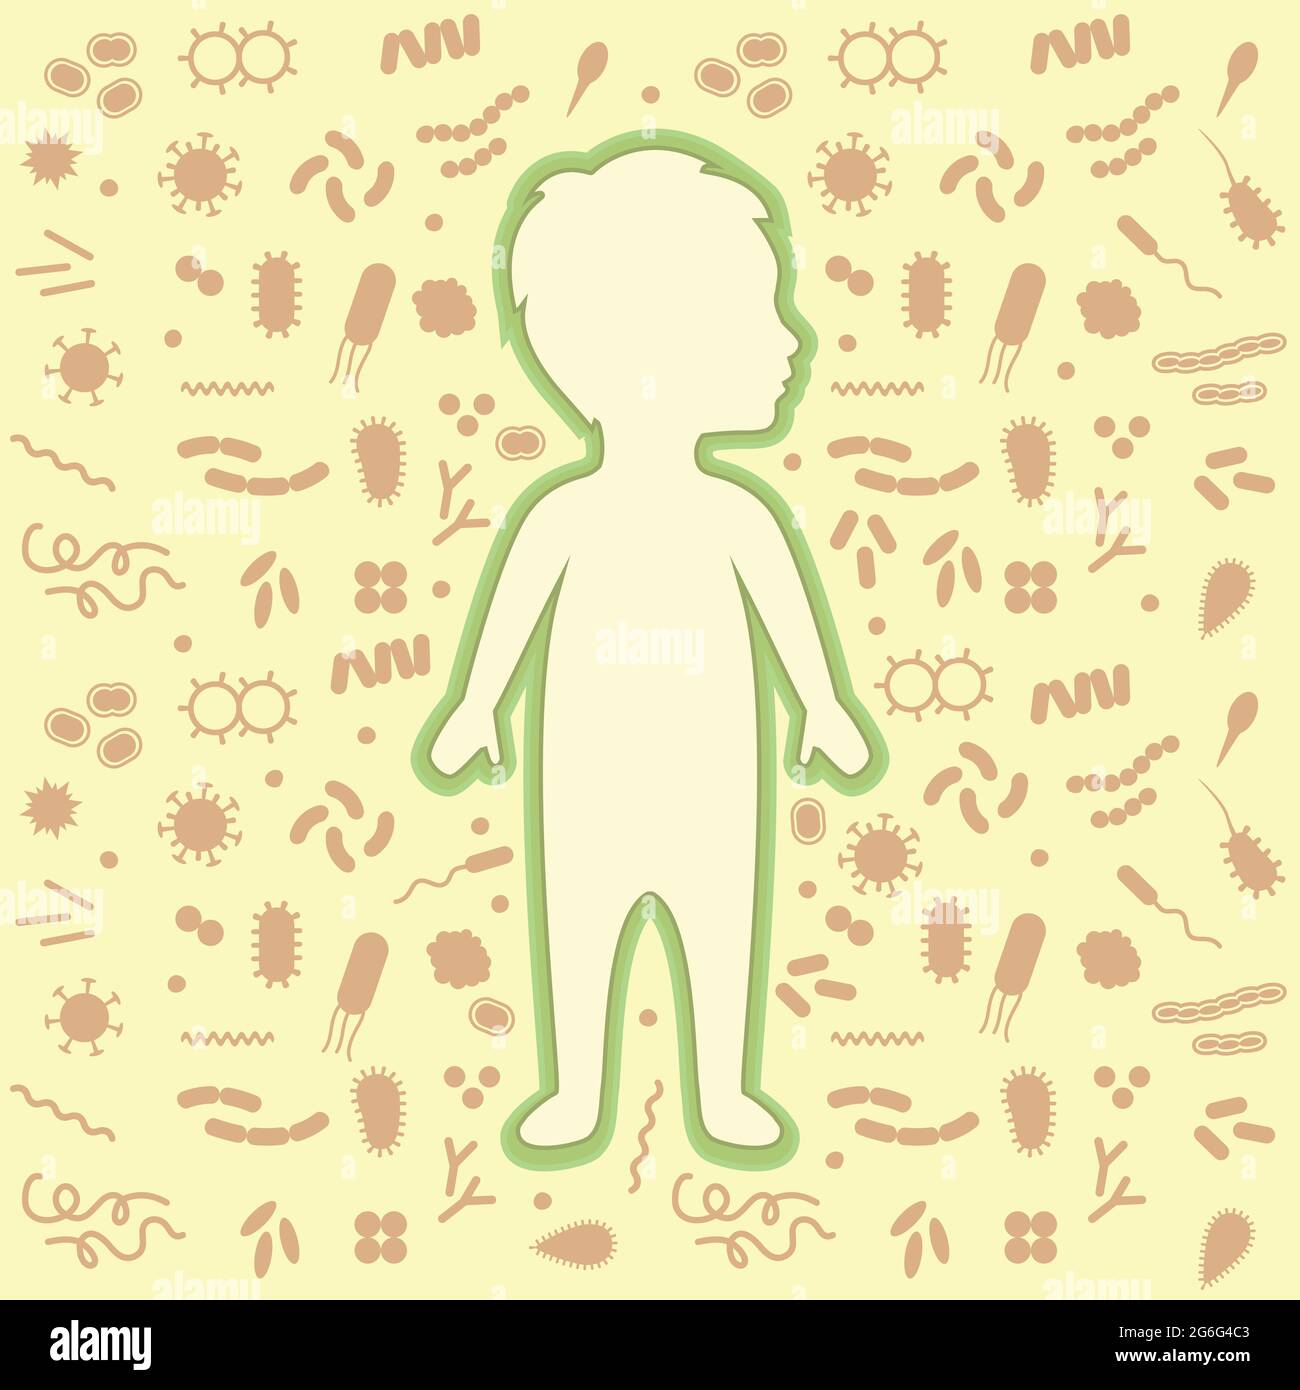 Immunity child illustration hi-res stock photography and images - Alamy